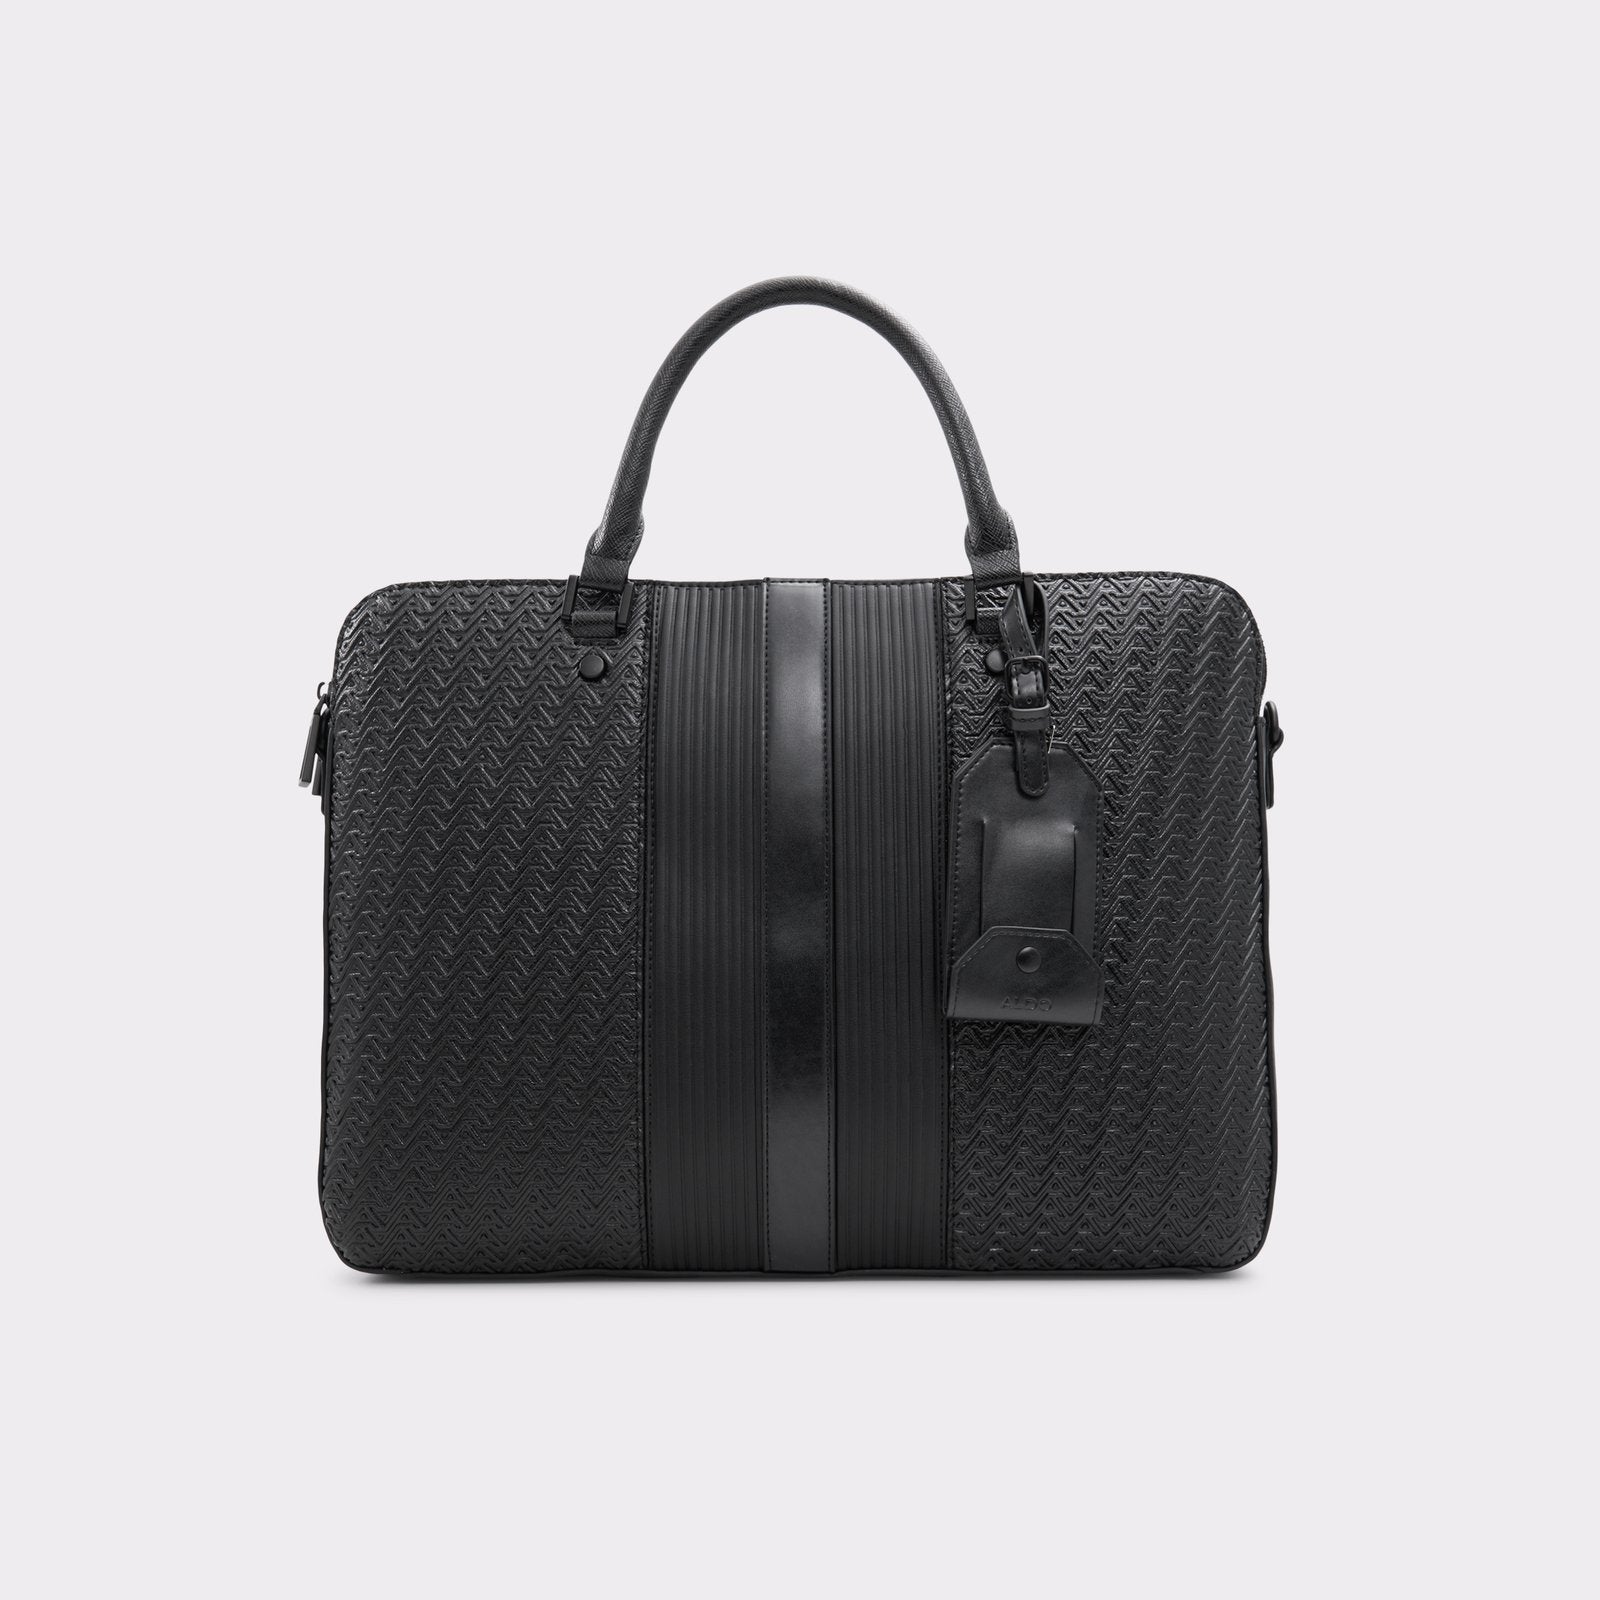 ALDO Adjustable Strap Bags for Men | Mercari